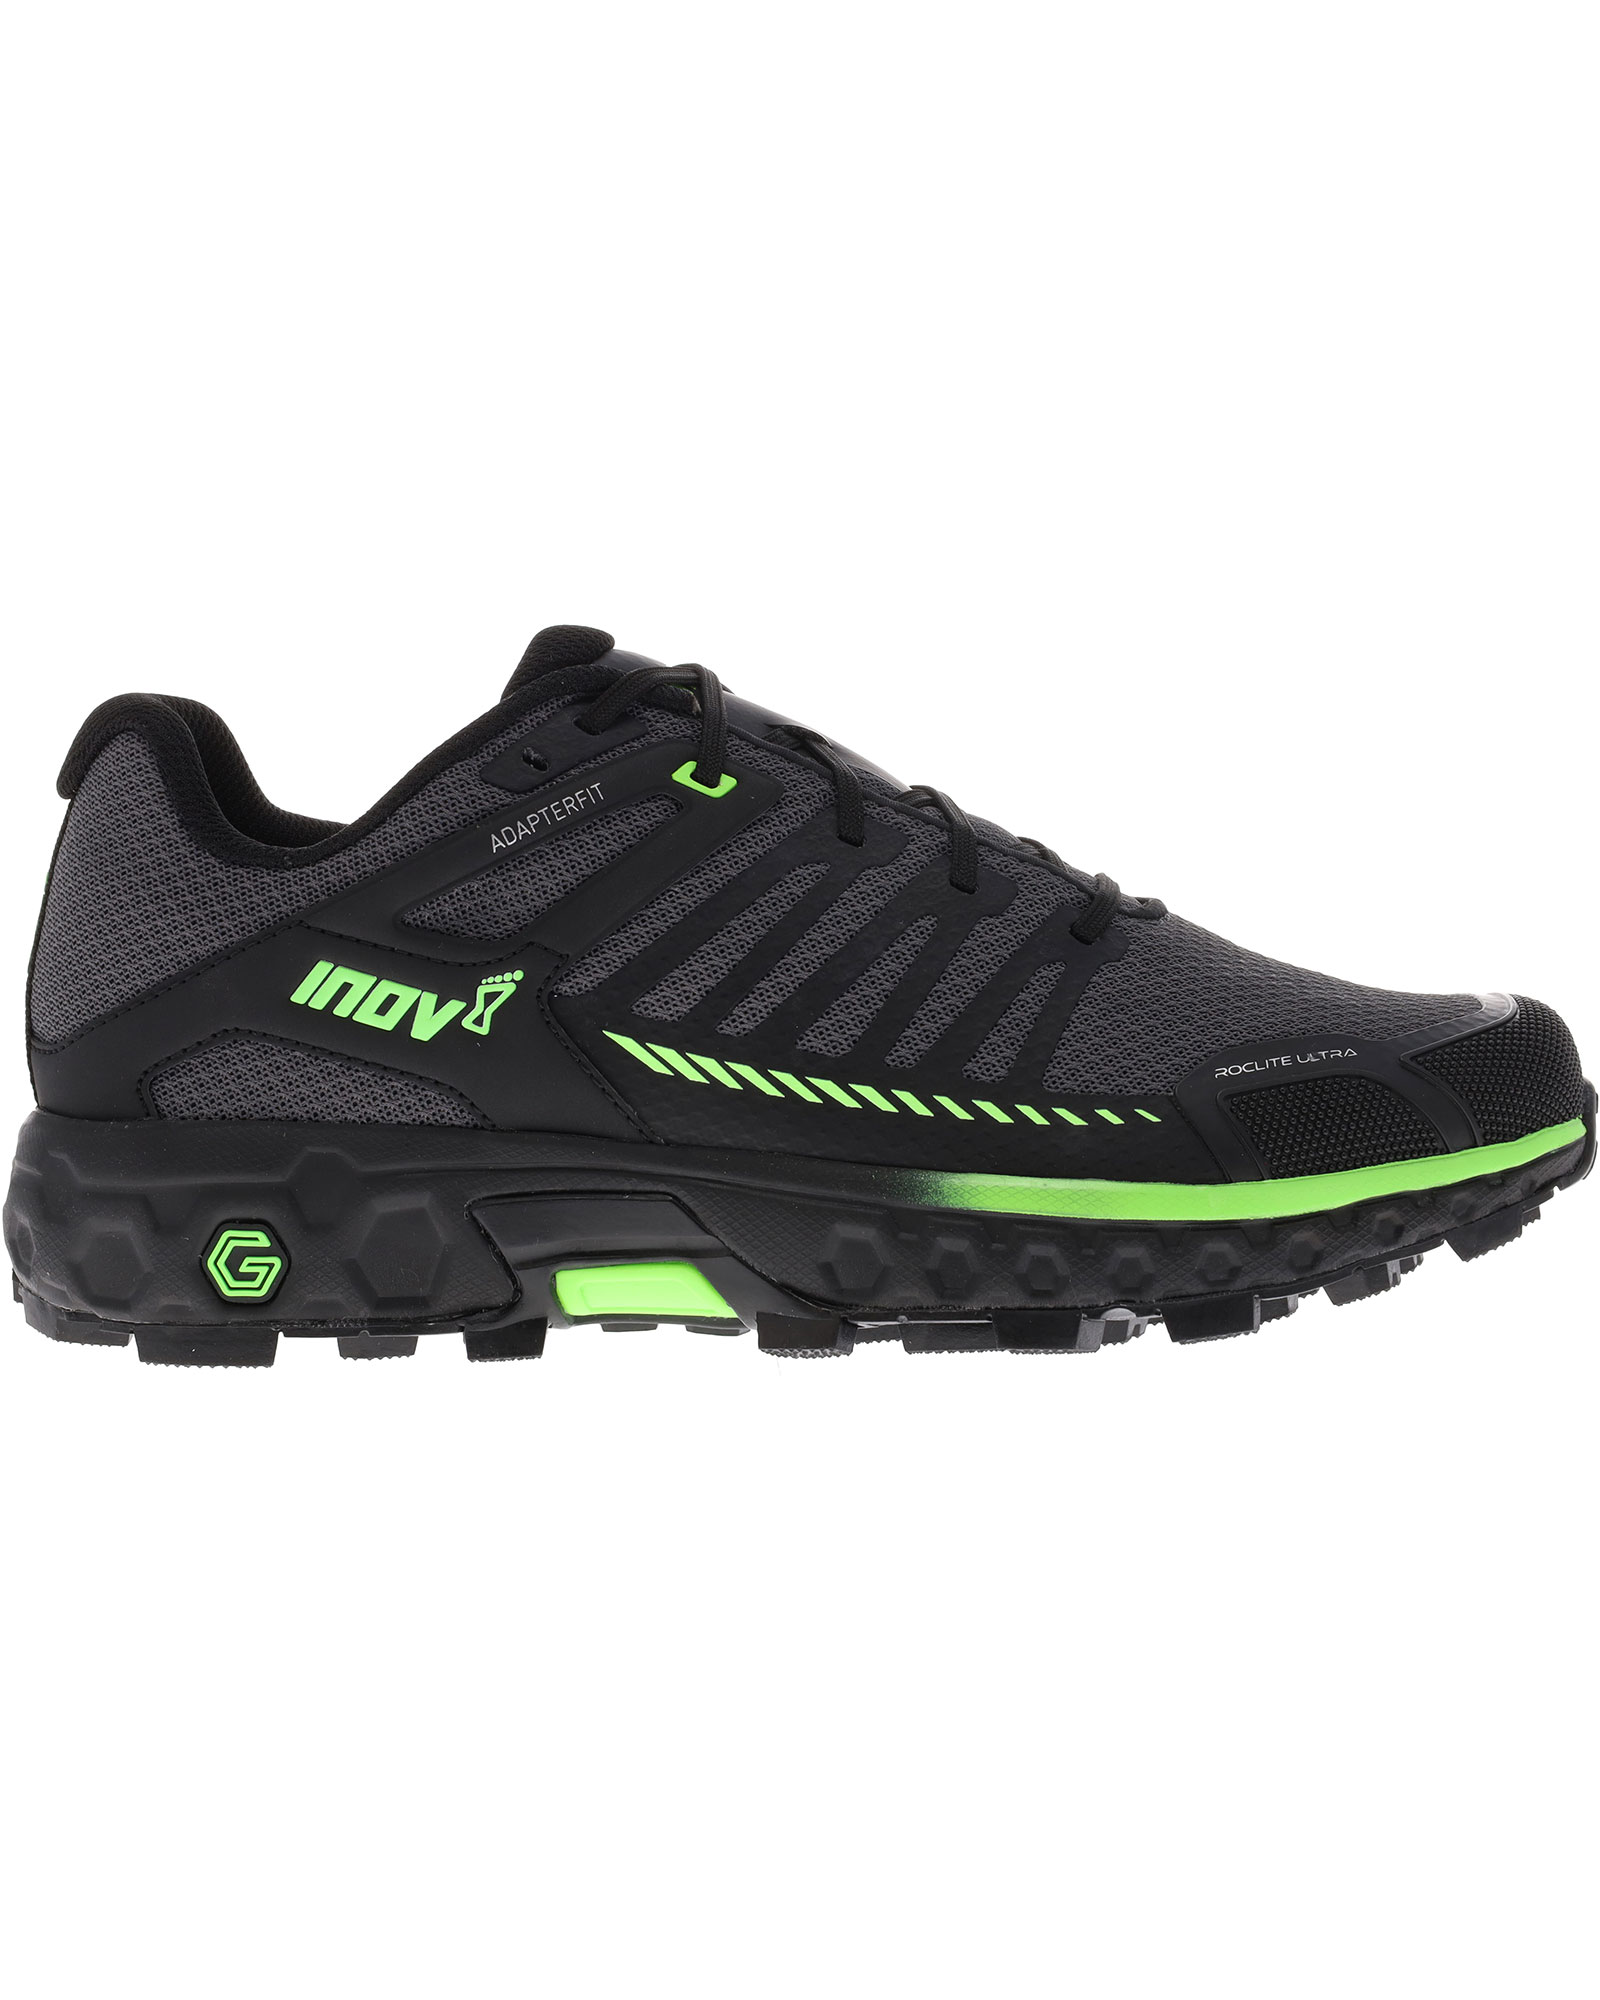 Inov 8 Roclite Ultra G 320 Men’s Shoes - Black/Green UK 9